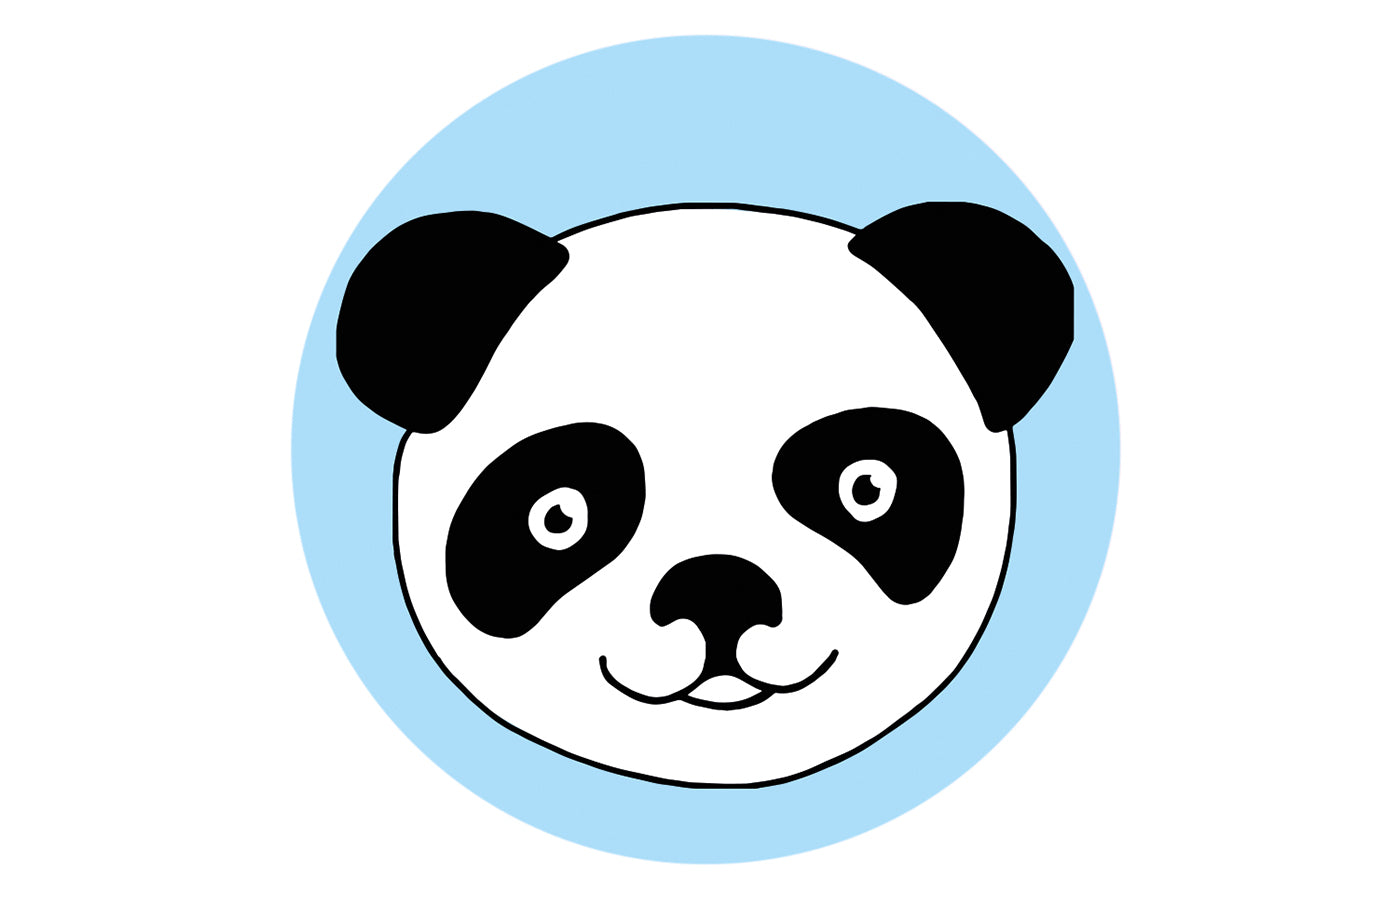 Beloningsstickers - panda